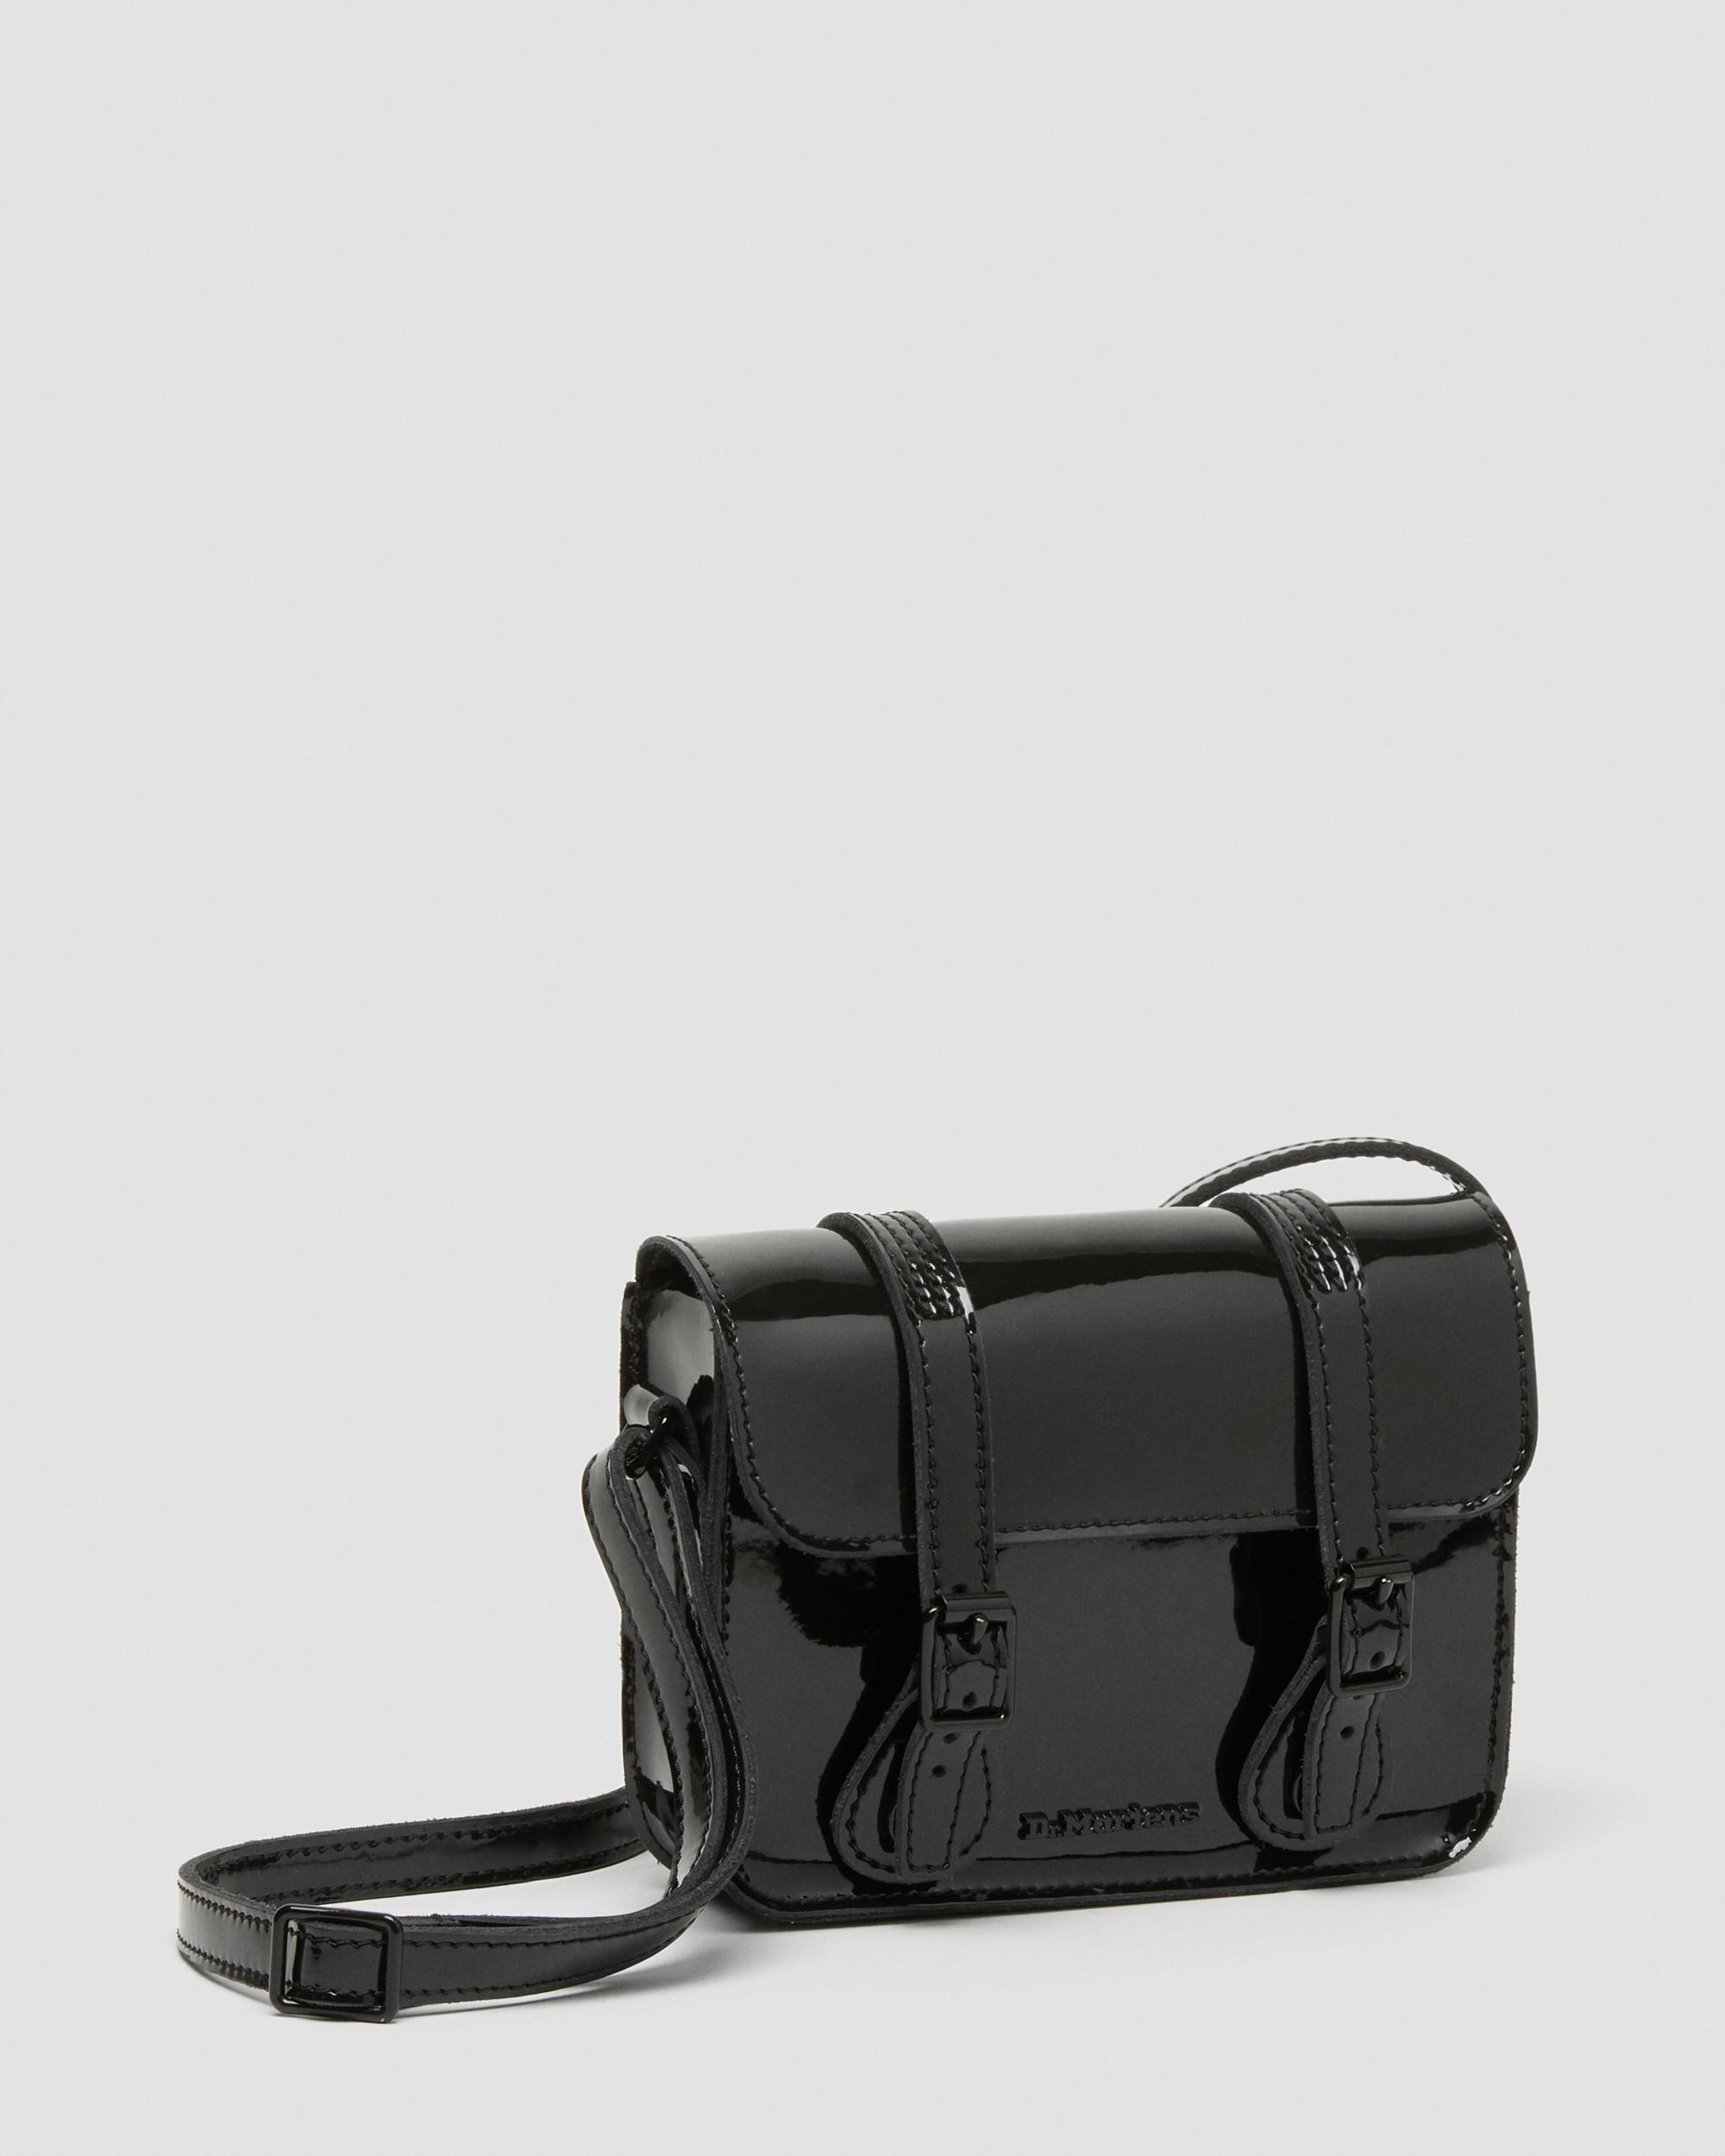 Patent leather satchel